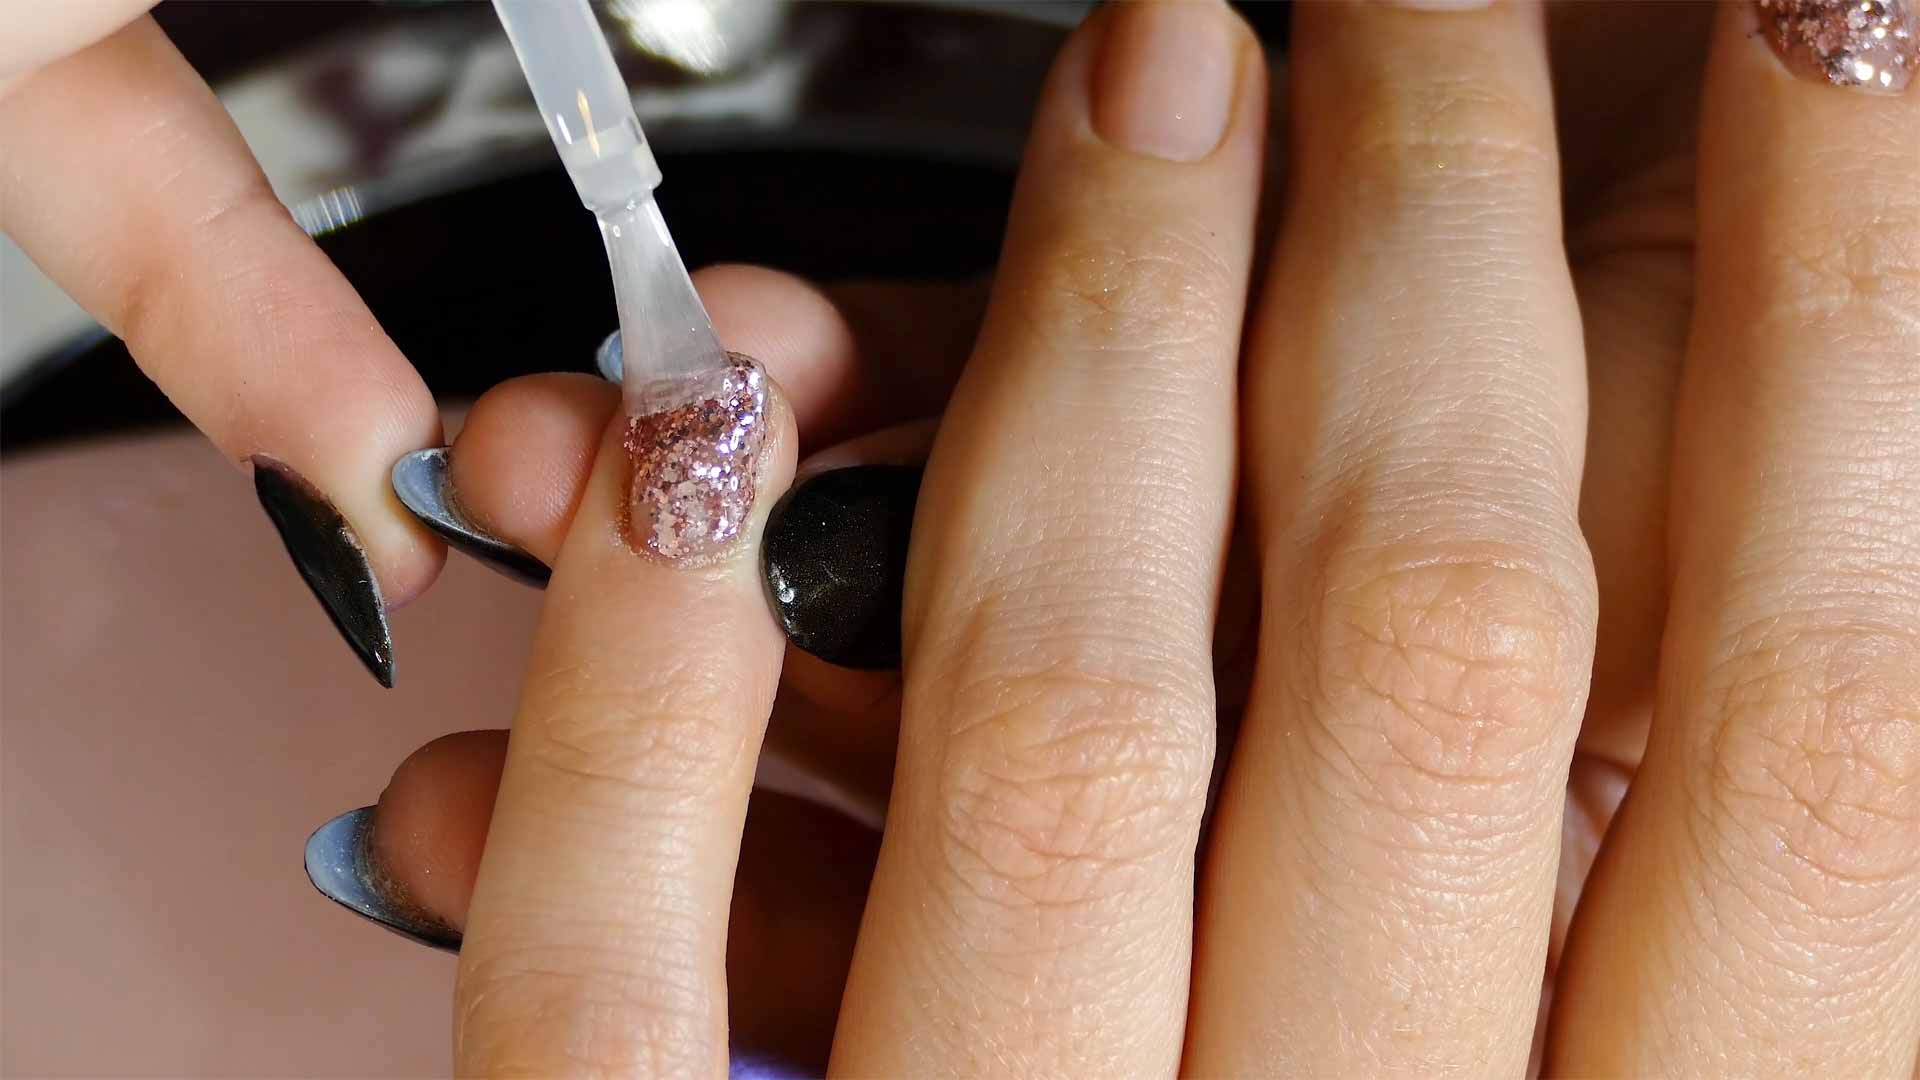 Manicure 19149 Philadelphia Nail Salon Complete Gel Polish Acrylic Nails Nail Repair UV Nails Crystal Overlay Acrylic French Silk Wrap Refillc